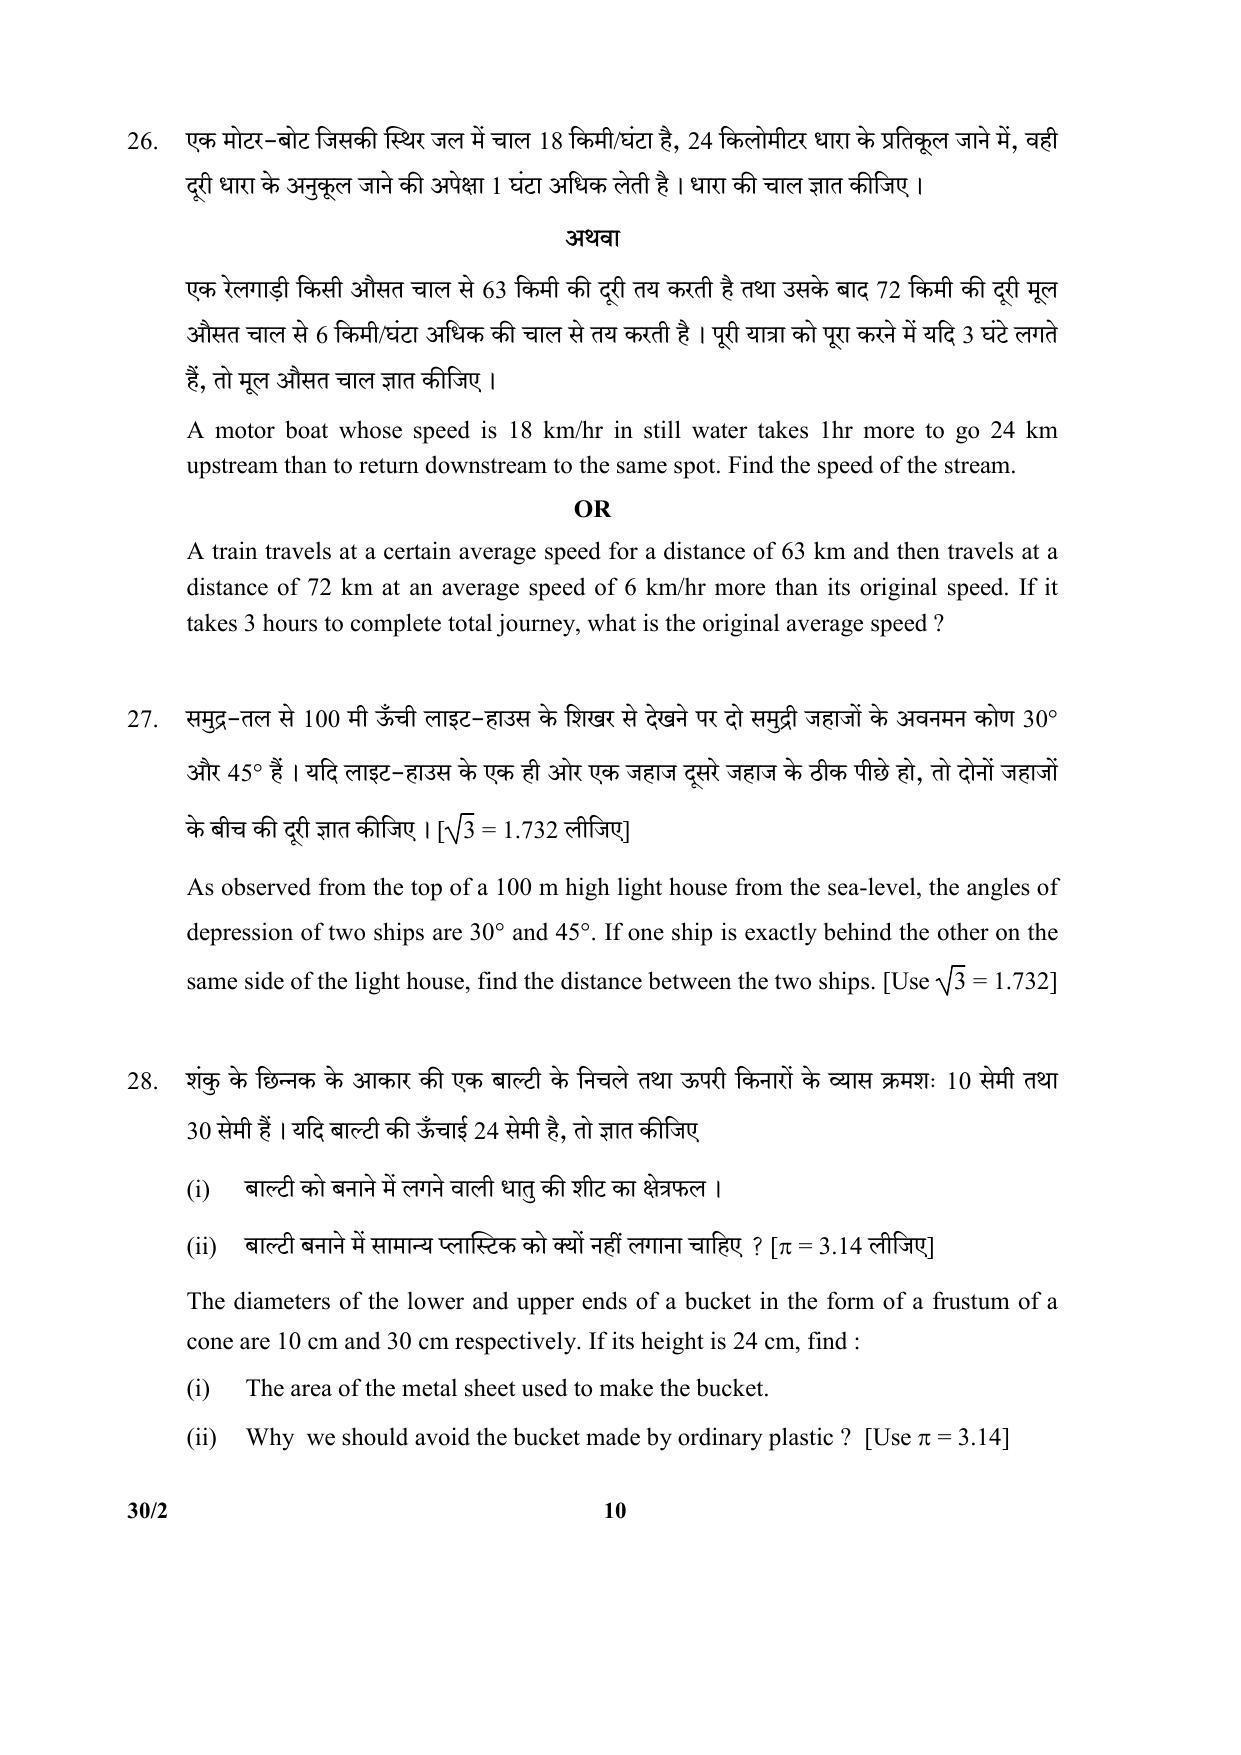 CBSE Class 10 30-2 SET-2 (Mathematics) 2018 Question Paper - Page 10